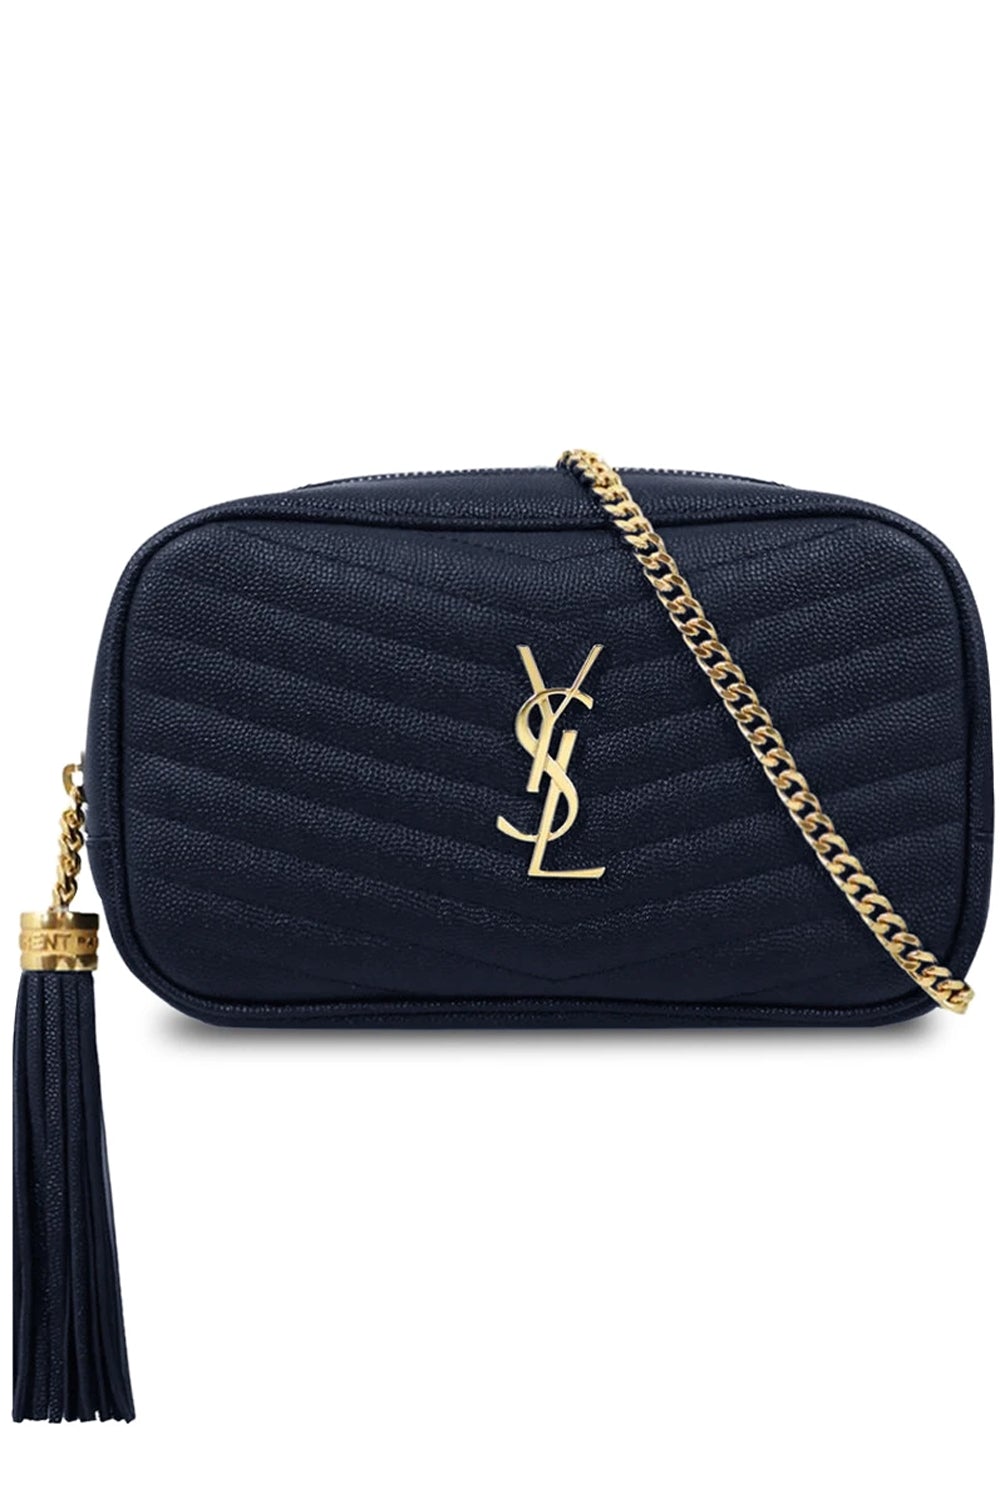 Saint Laurent Bucket Bags for Women | YSL Bags | FARFETCH US